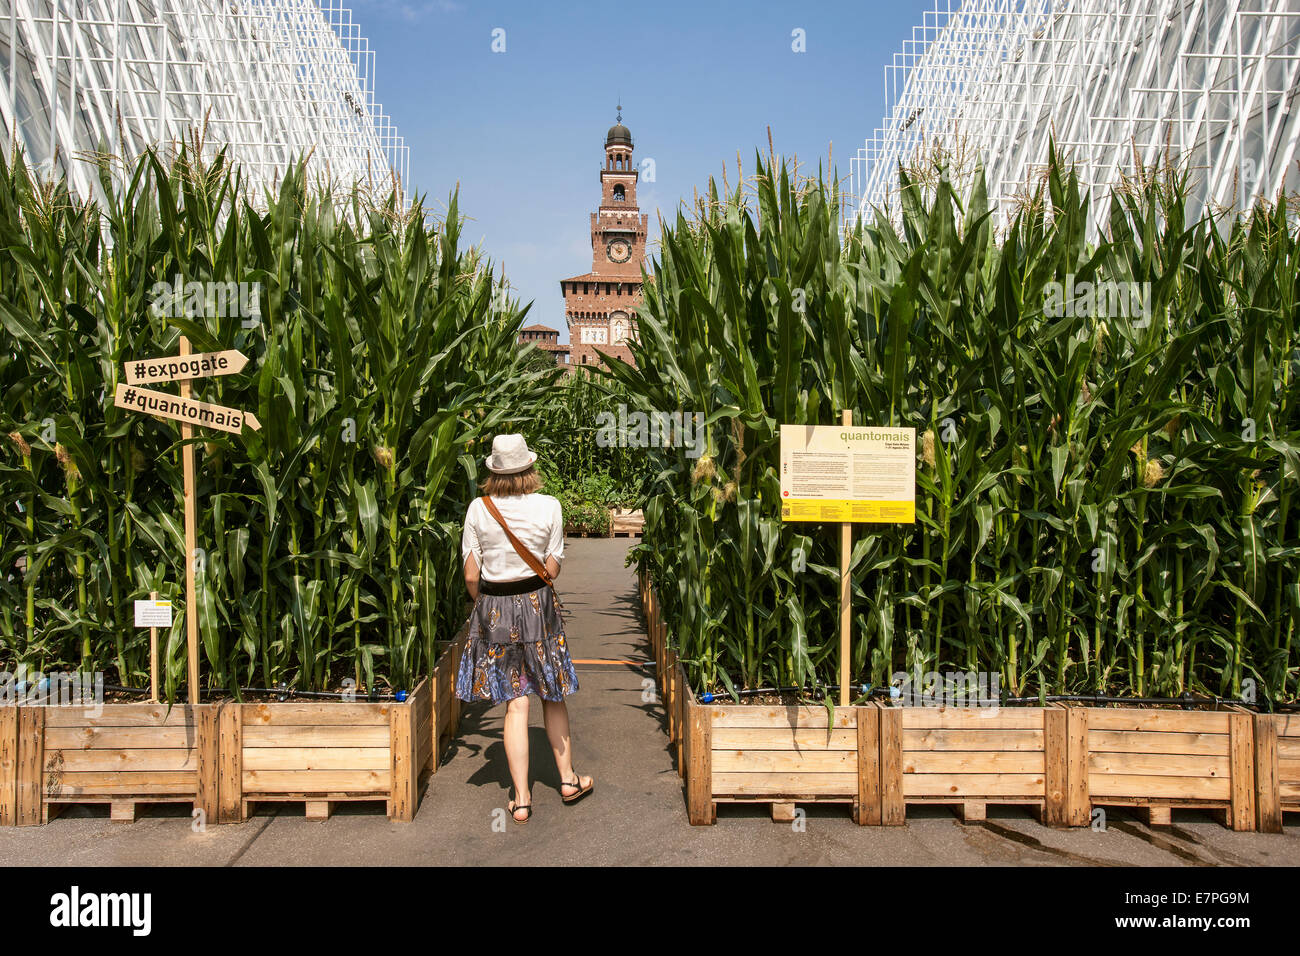 Milan, Expo 2015, EXPOGATE, Fair Universal, Sforzesco castle, city, gate, infopoint, signpost, corn flower beds, woman, Italy Stock Photo